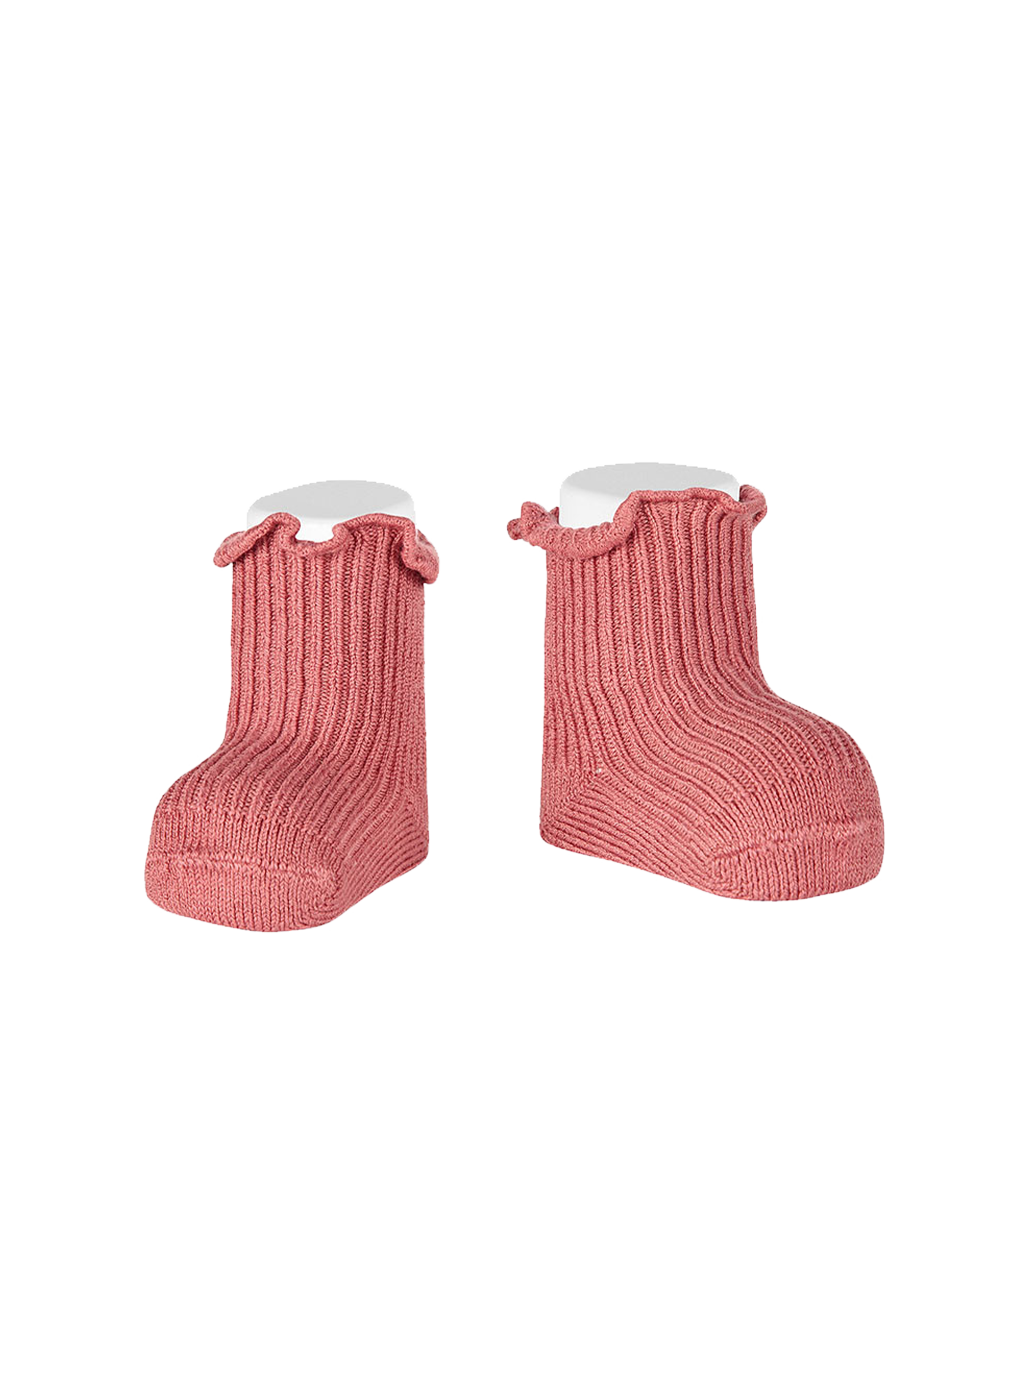 Baby socks with ruffles